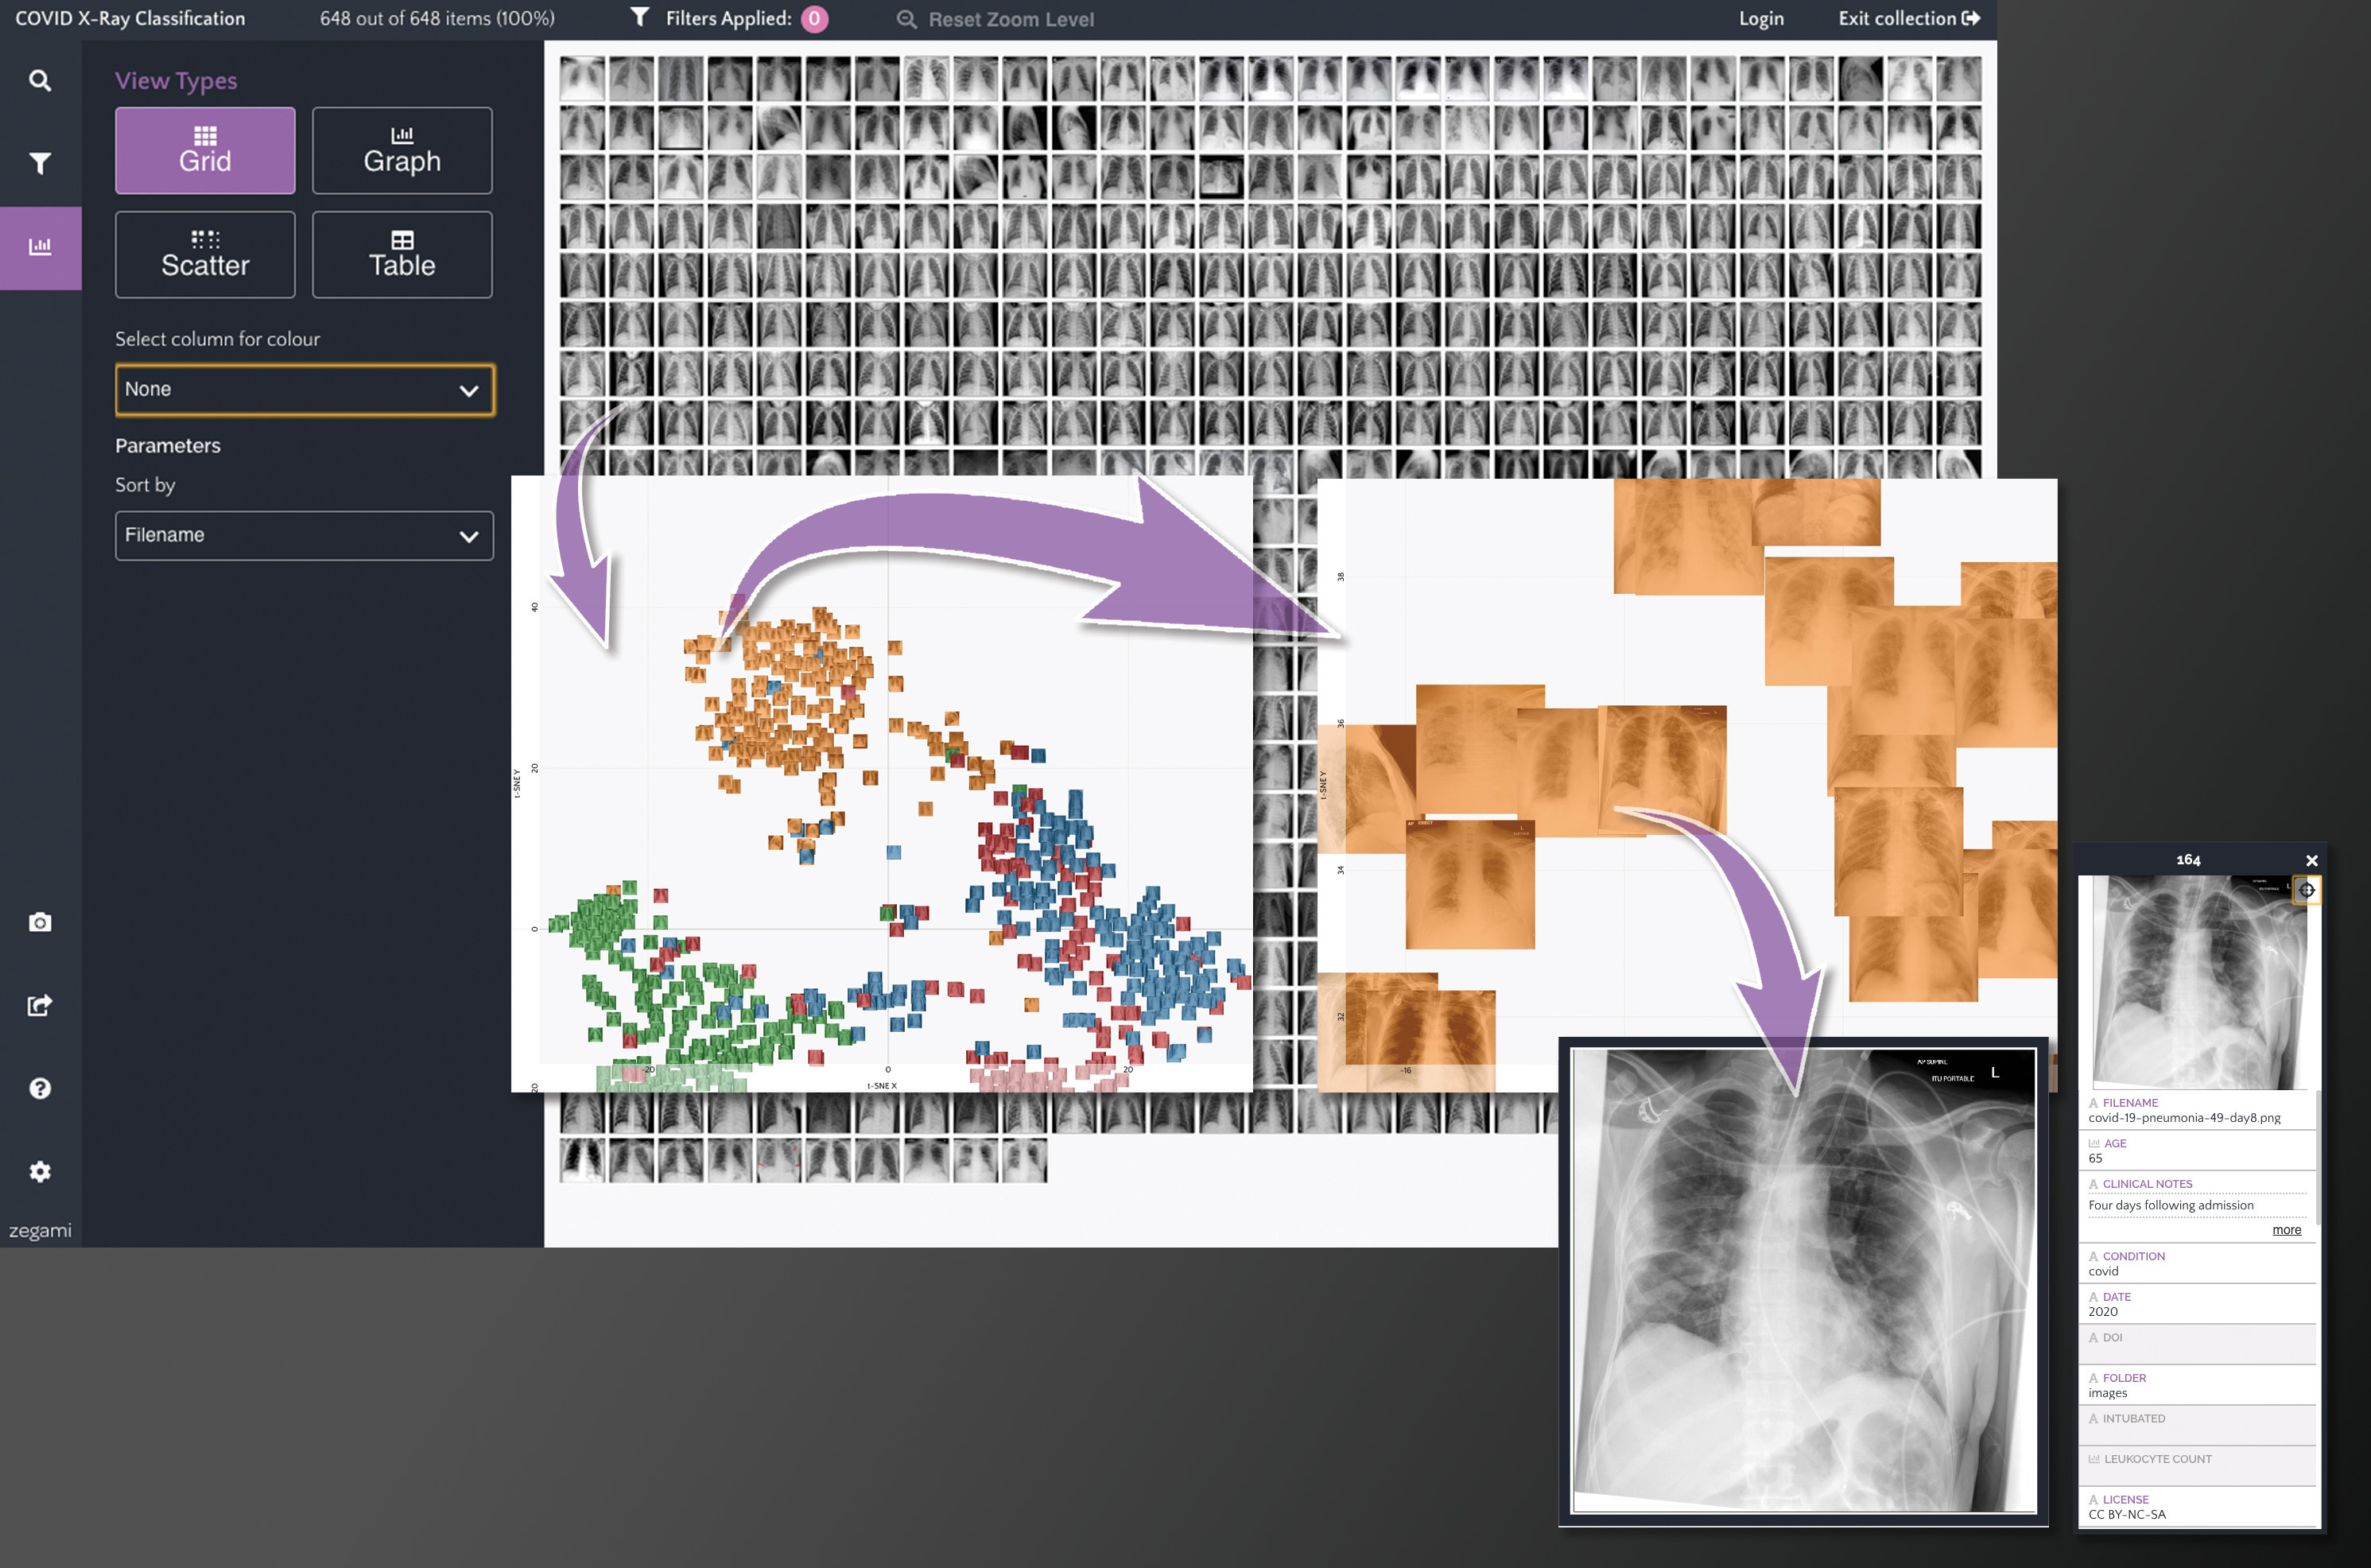 Zegami COVID-19 chest X-Ray analysis